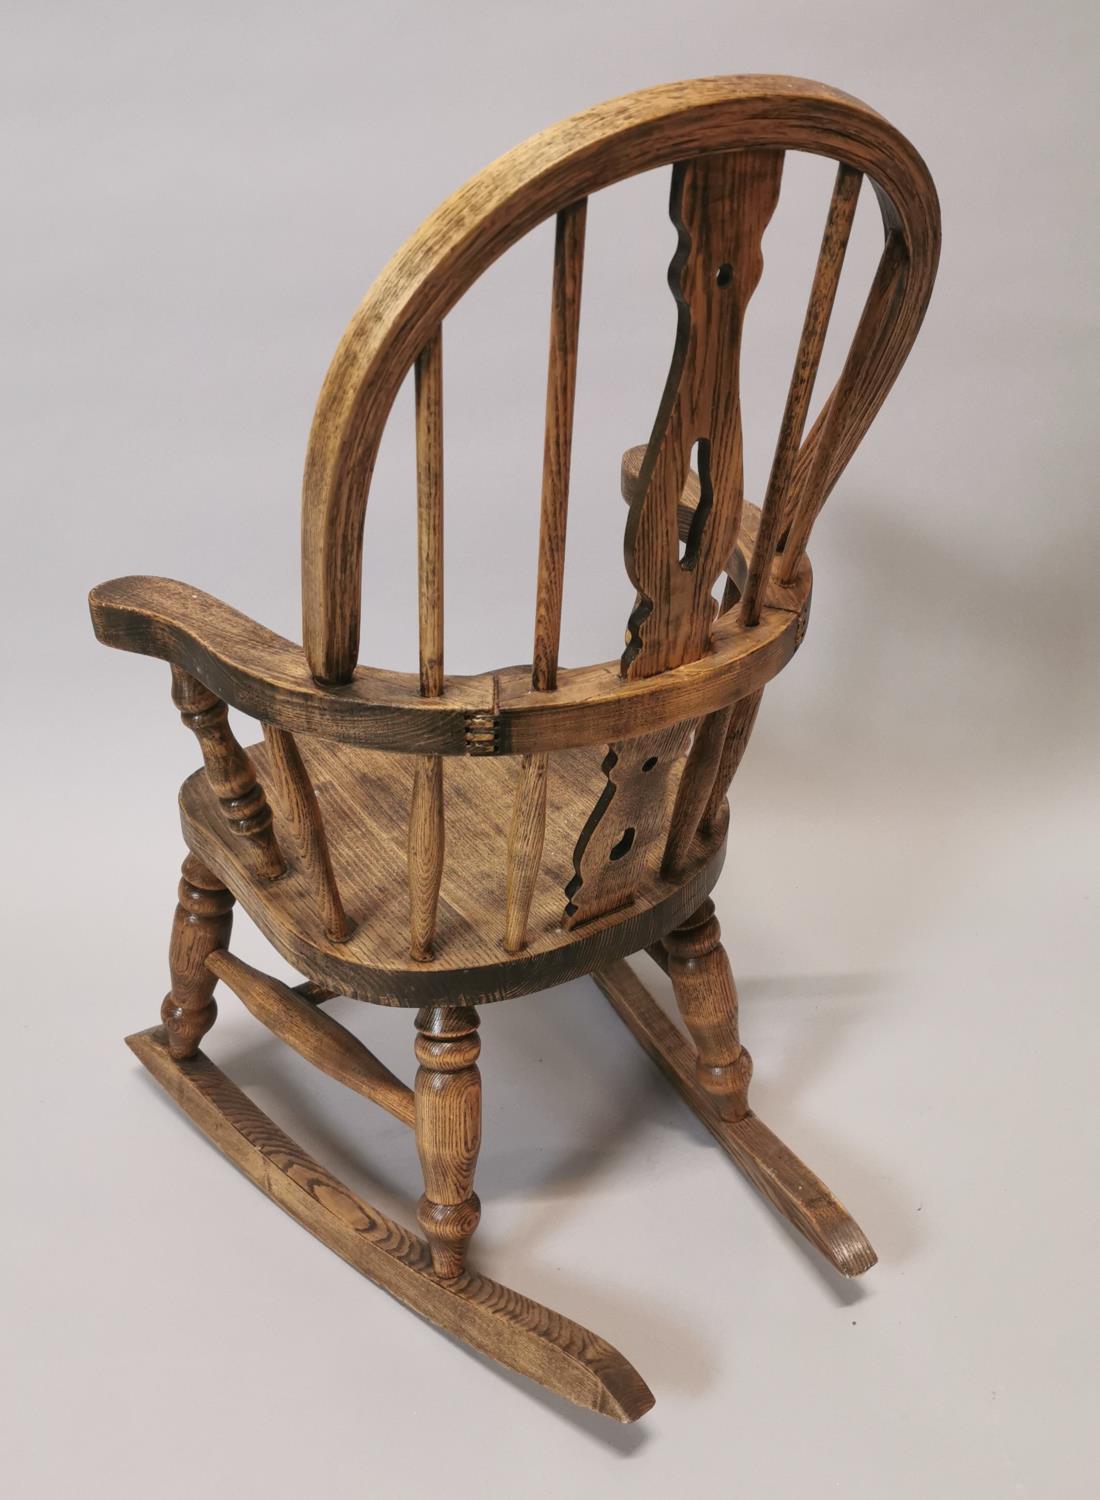 Elm Windsor child's rocking chair - Image 3 of 3